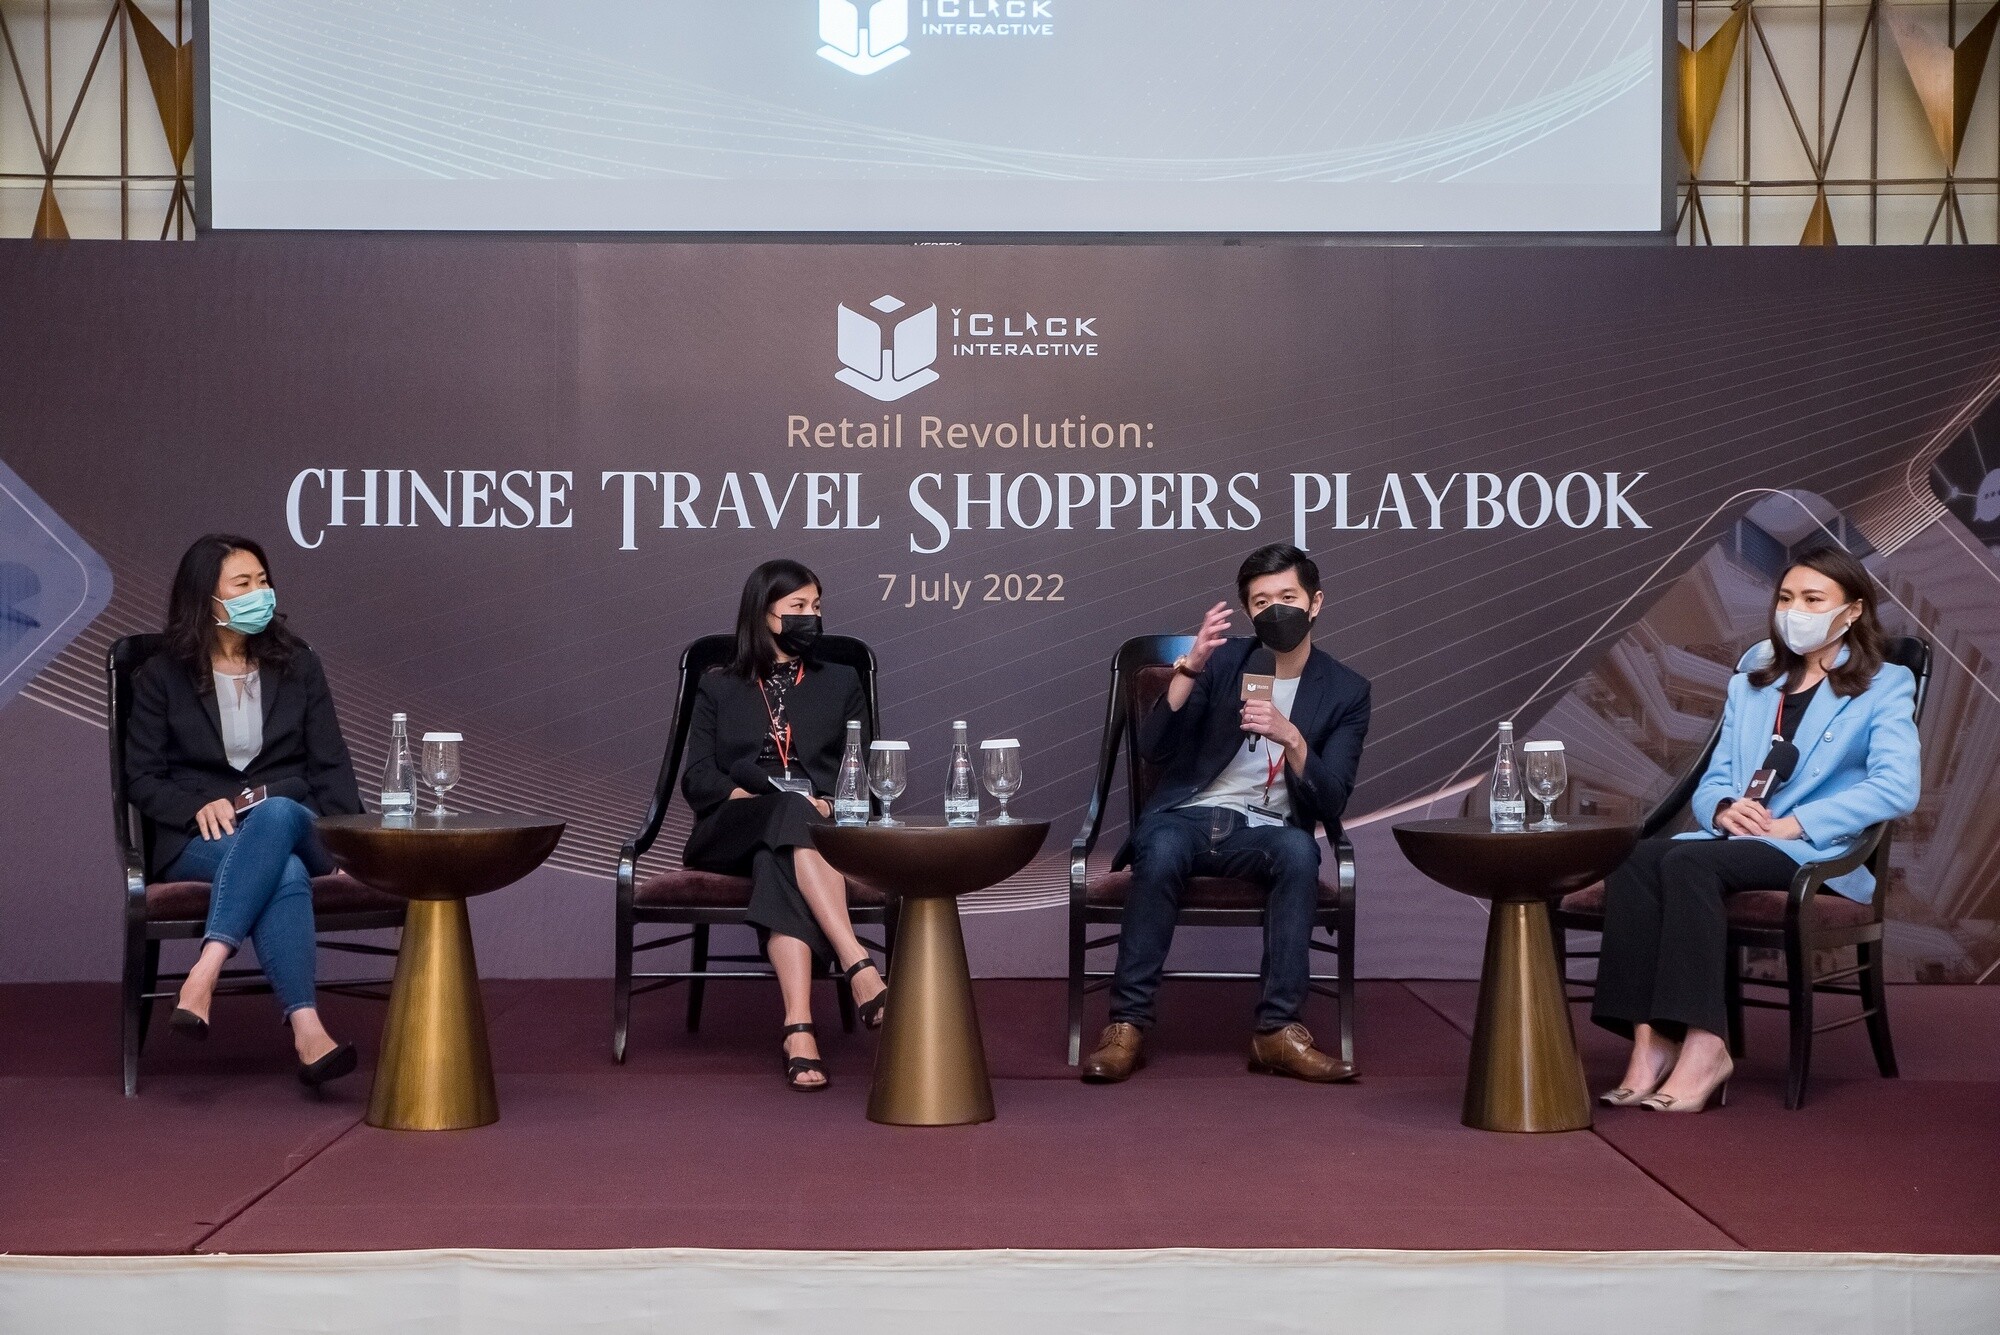 VGI X iClick Interactive ชวนปลดล็อคตลาดค้าปลีกเตรียมต้อนรับการกลับมาของนักท่องเที่ยวจีนในงาน "Retail Revolution: Chinese Travel Shoppers Playbook"